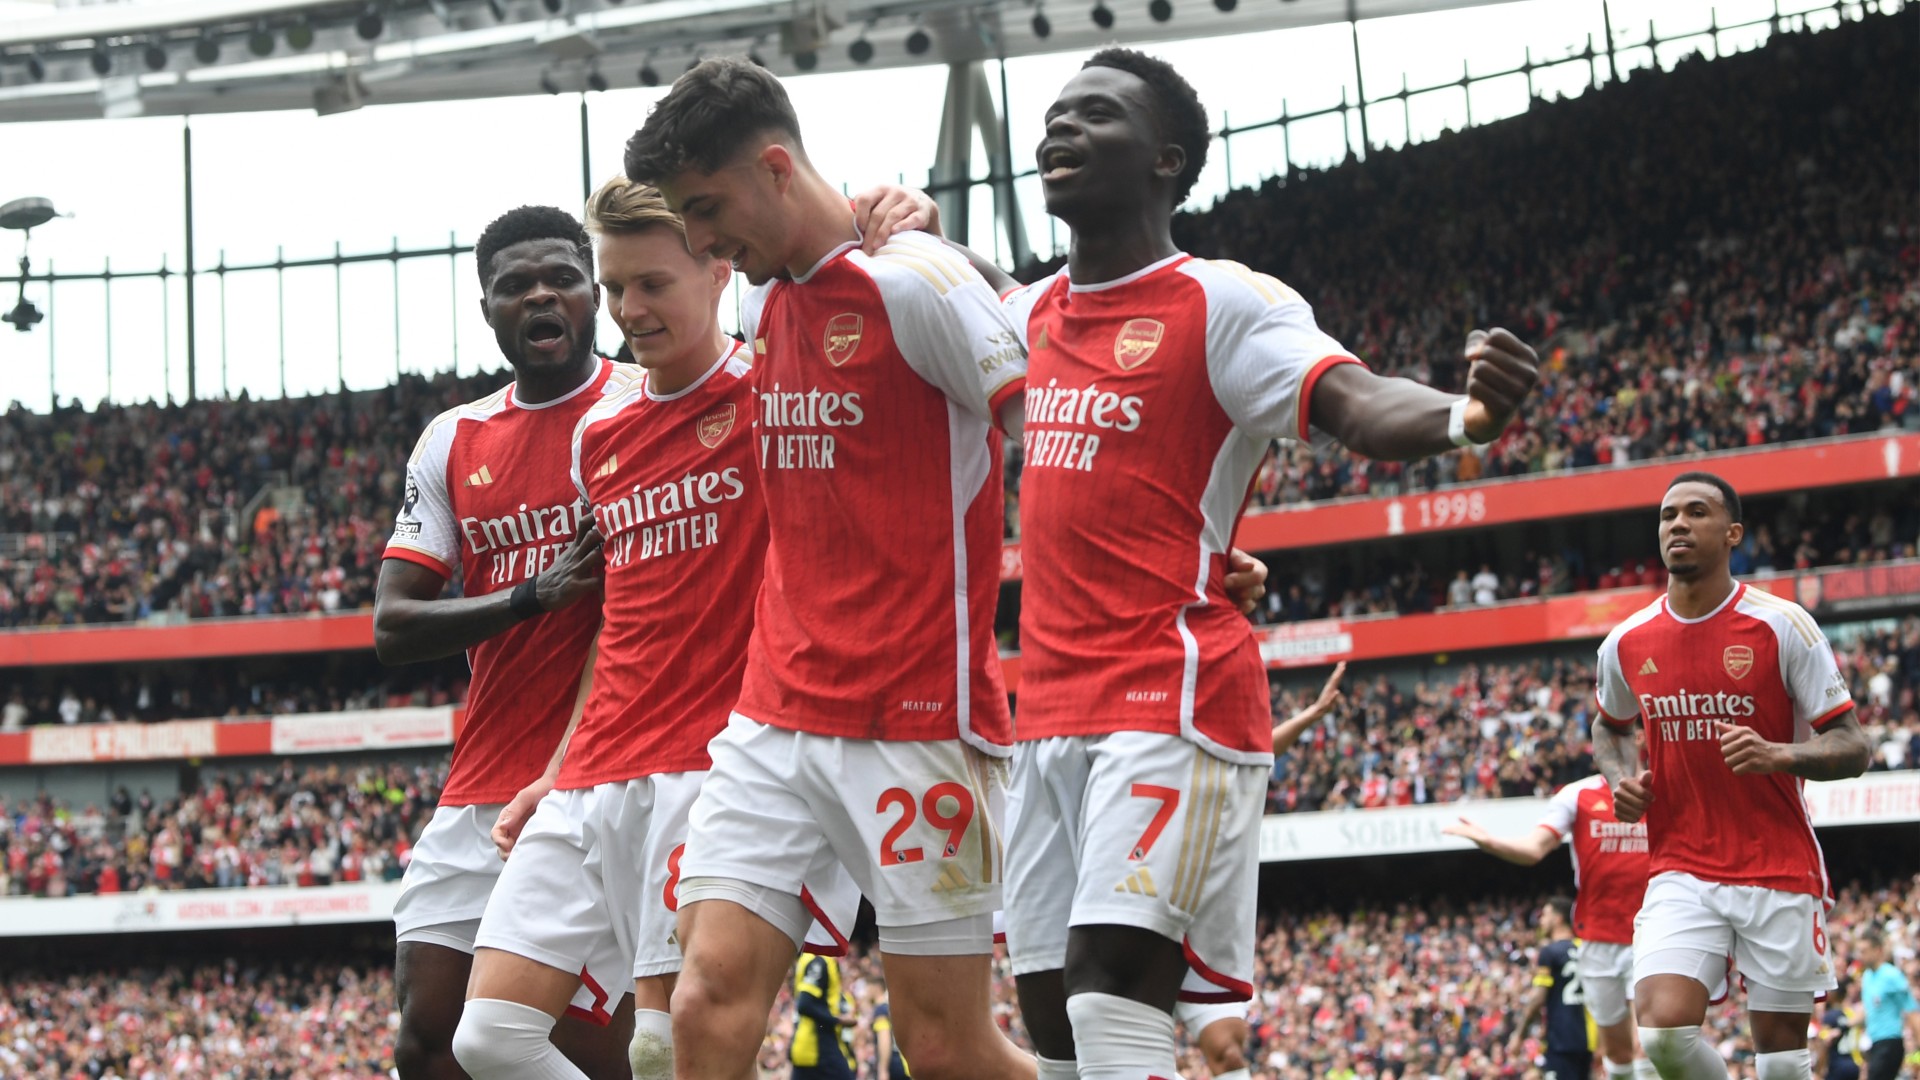 Parlour: Arsenal on upward curve